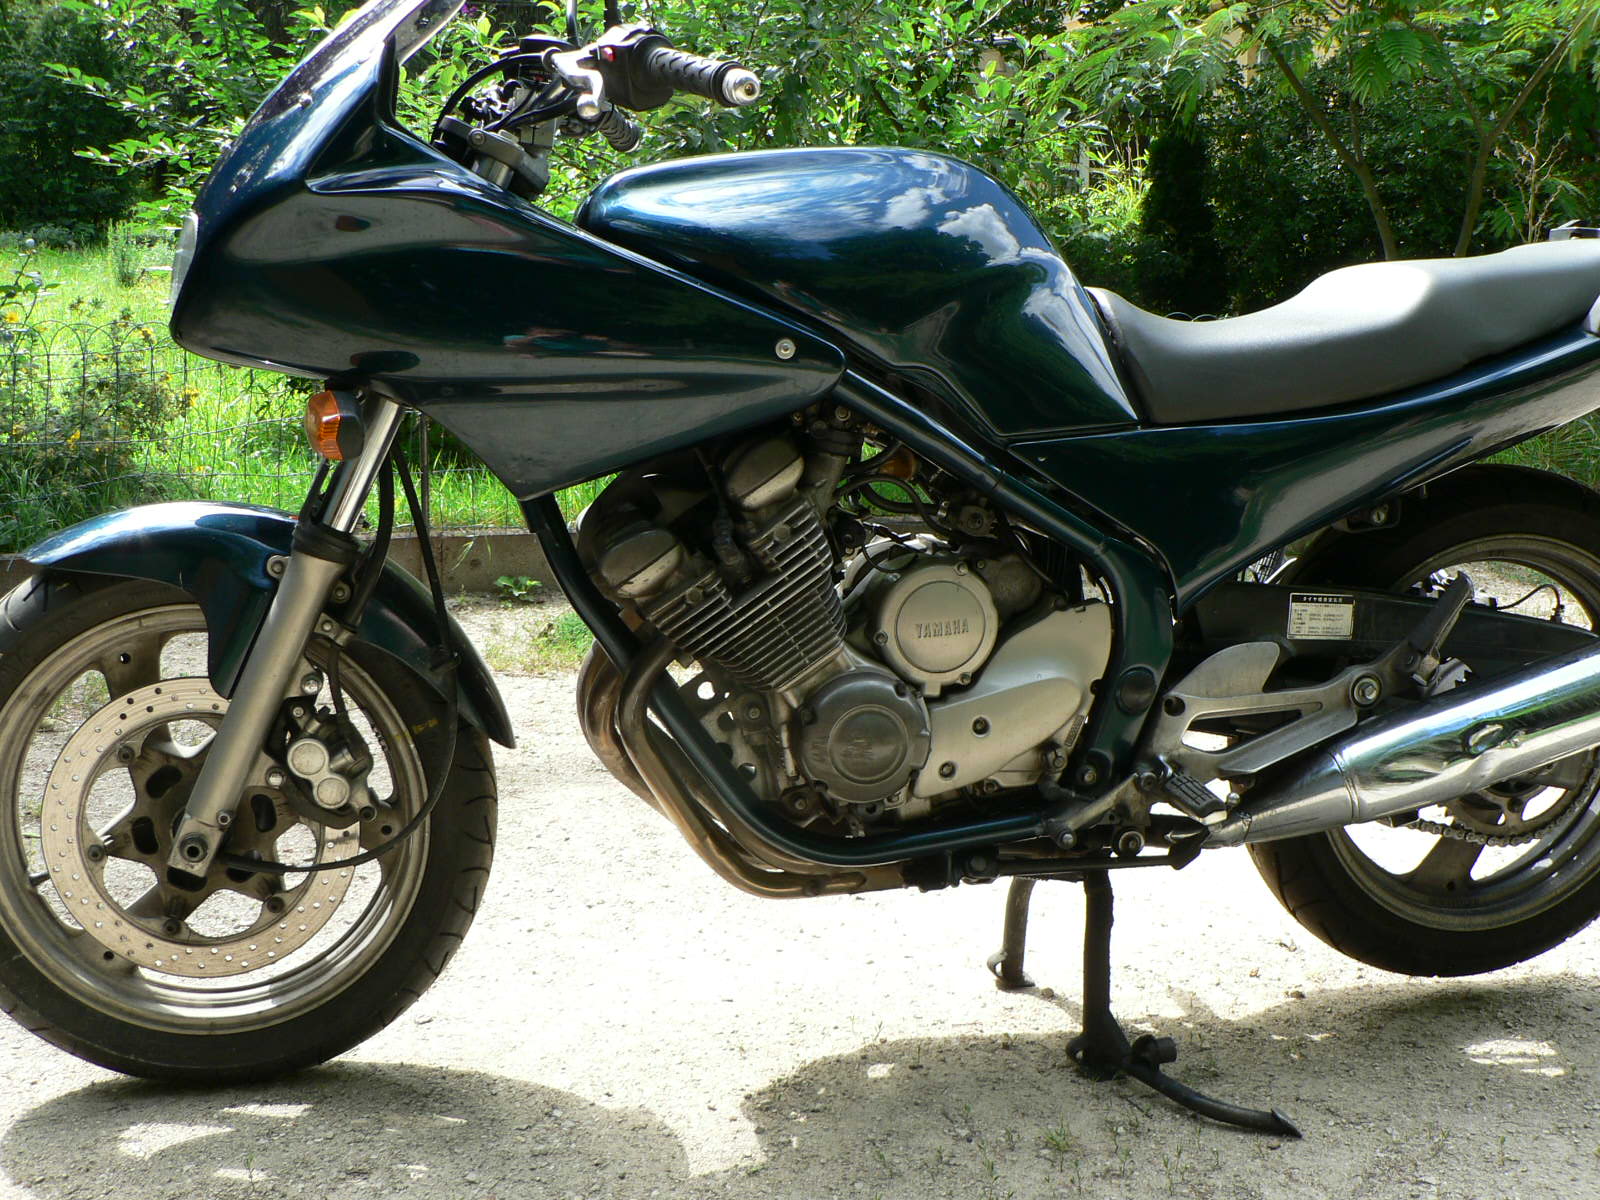 Ямаха xj 600 diversion - хороший дорожный мотоцикл